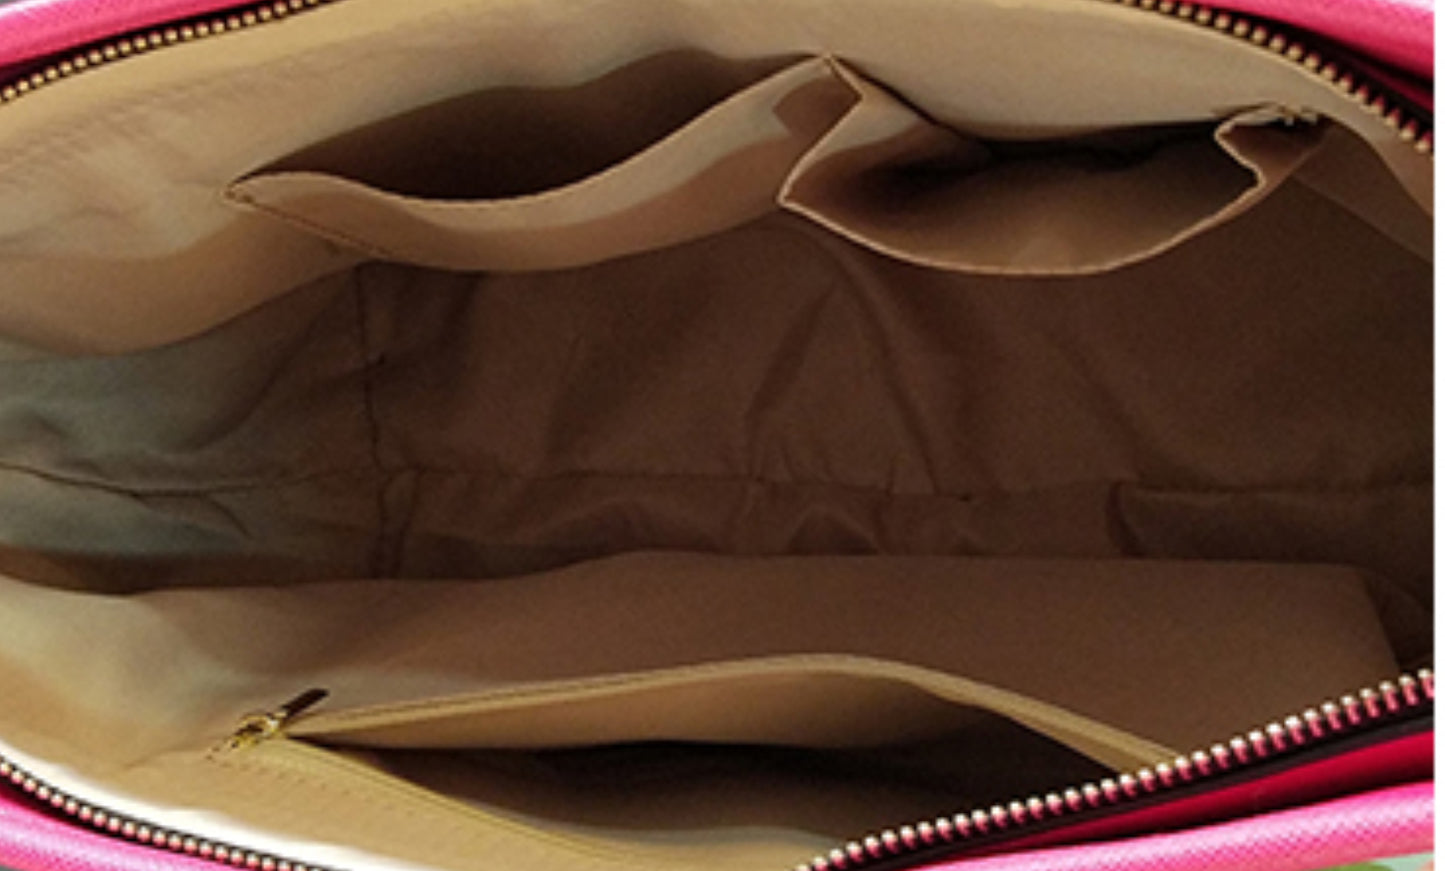 Mushroom Family - Vegan Leather Zipper Tote Handbag (Large)